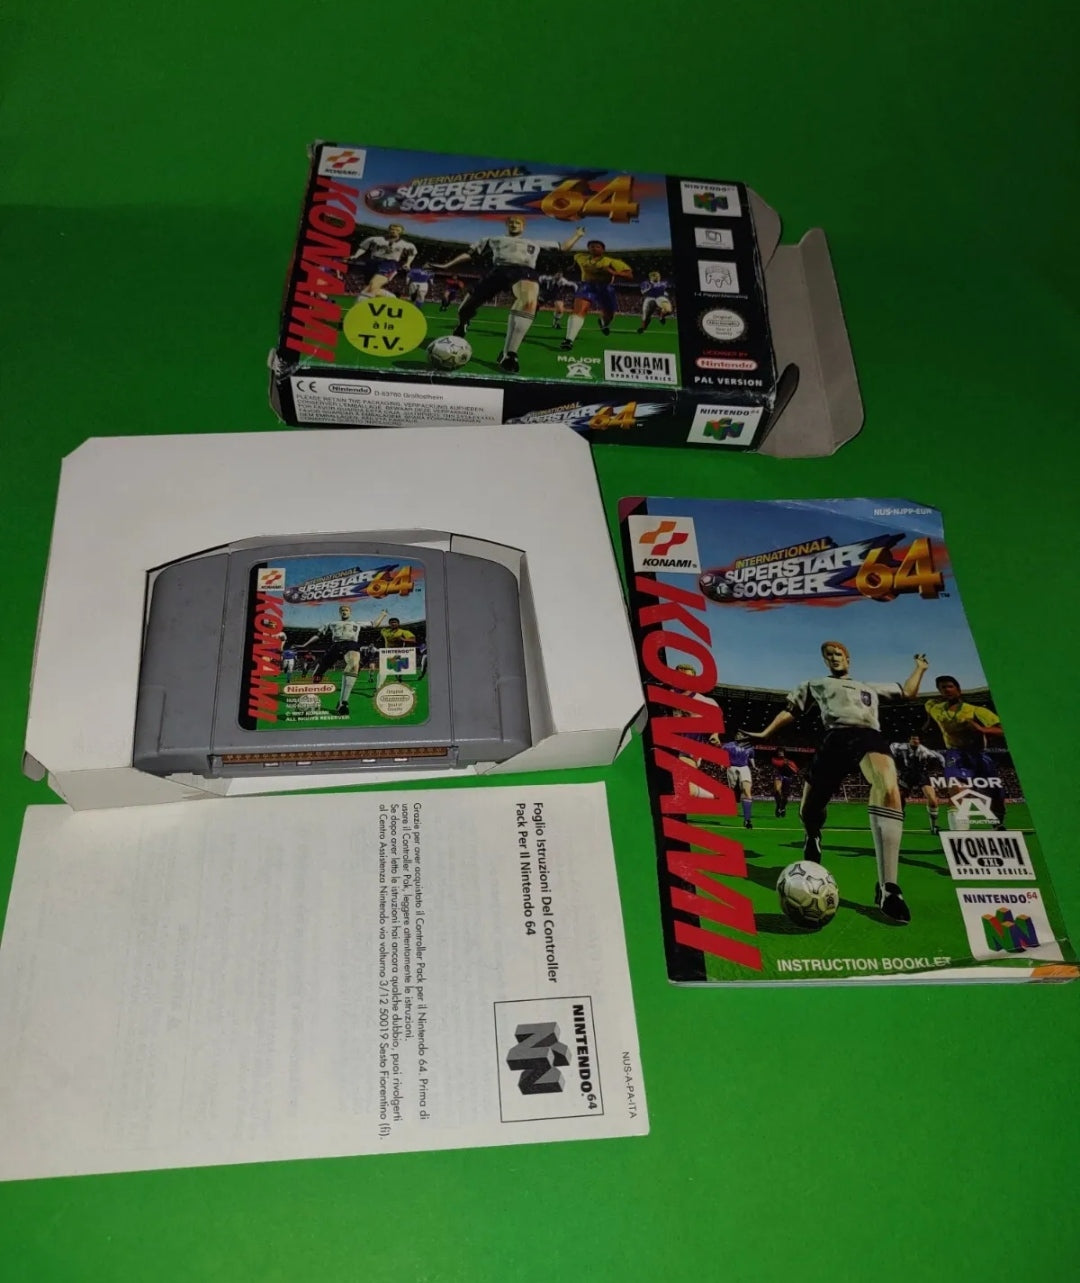 Nintendo 64 International Superstar Soccer 64 completo n64 konami game